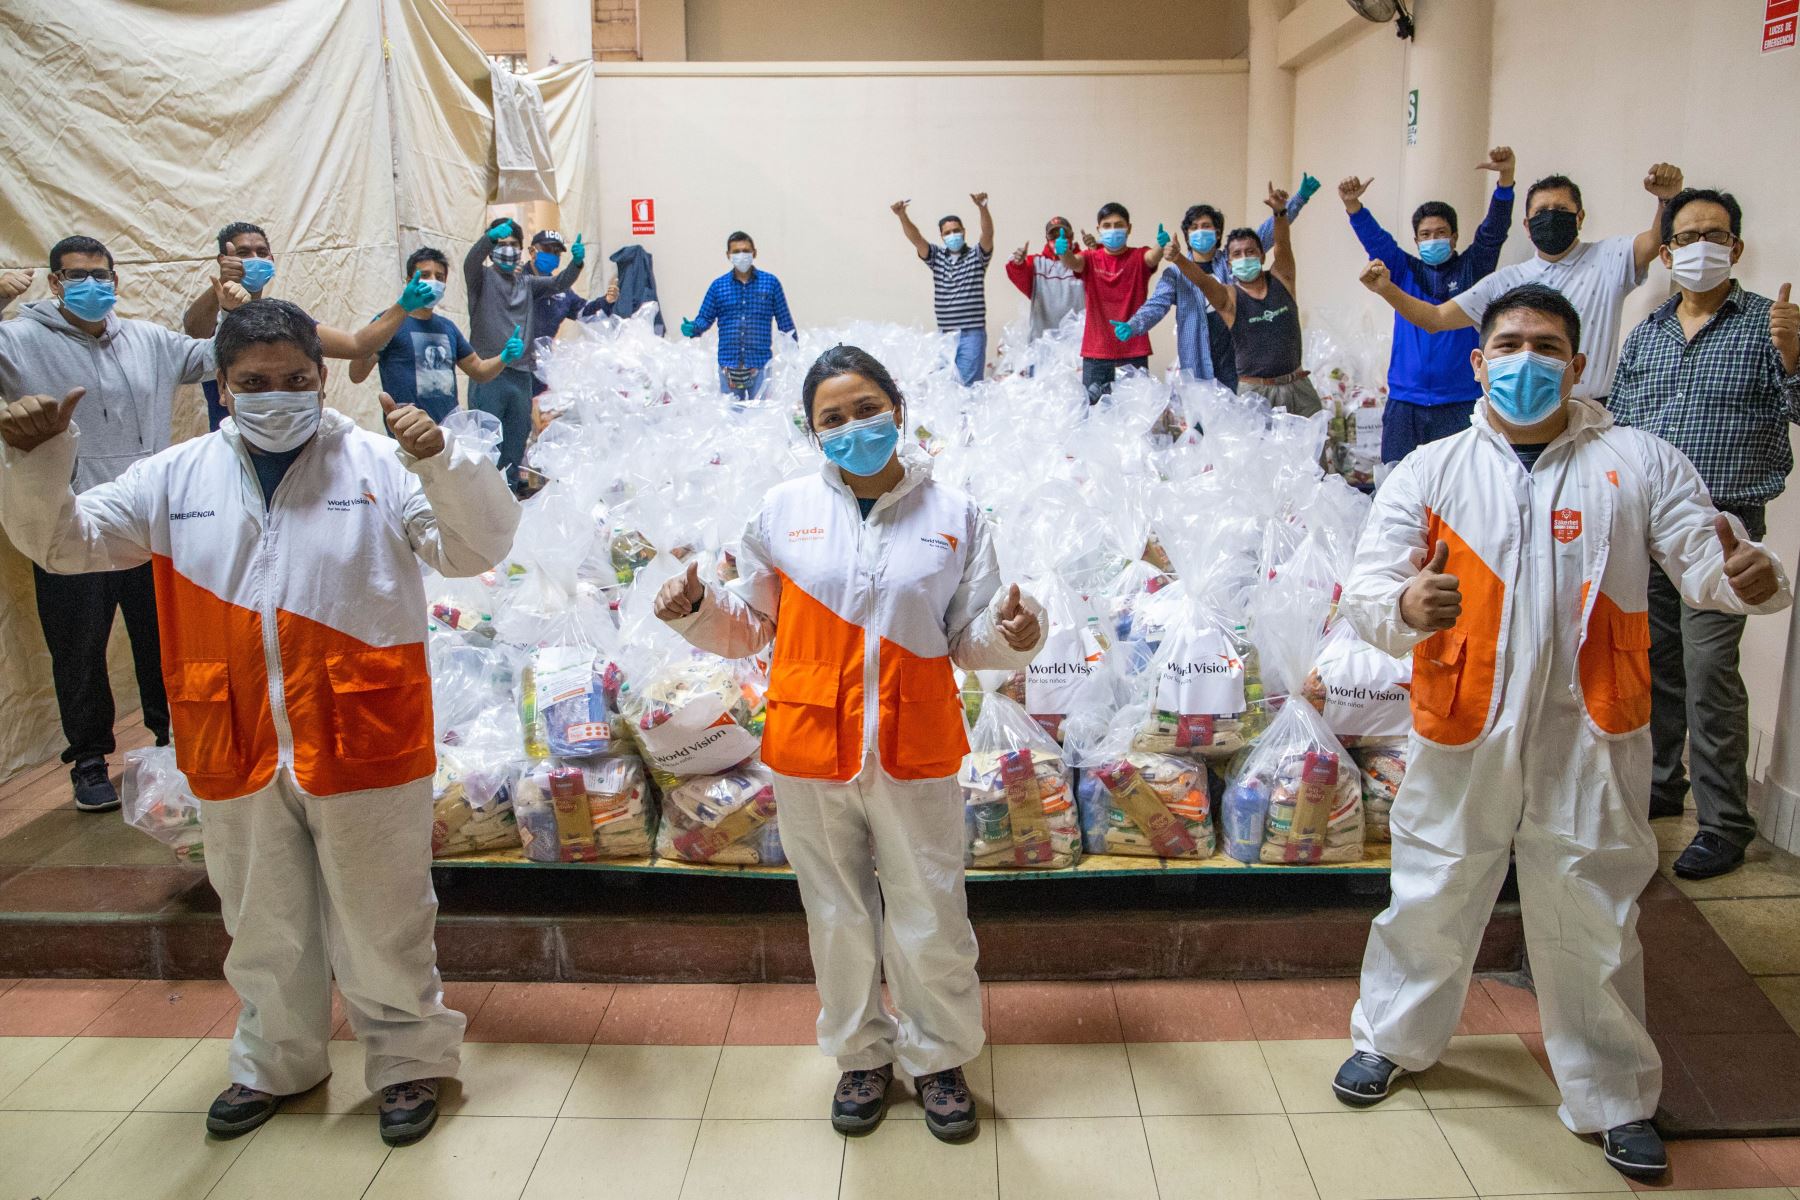 La organización World Vision Perú entregó canastas de alimentos a familias en situación vulnerable frente al covid-19. Foto: ANDINA/DifusiónANDINA/Difusión